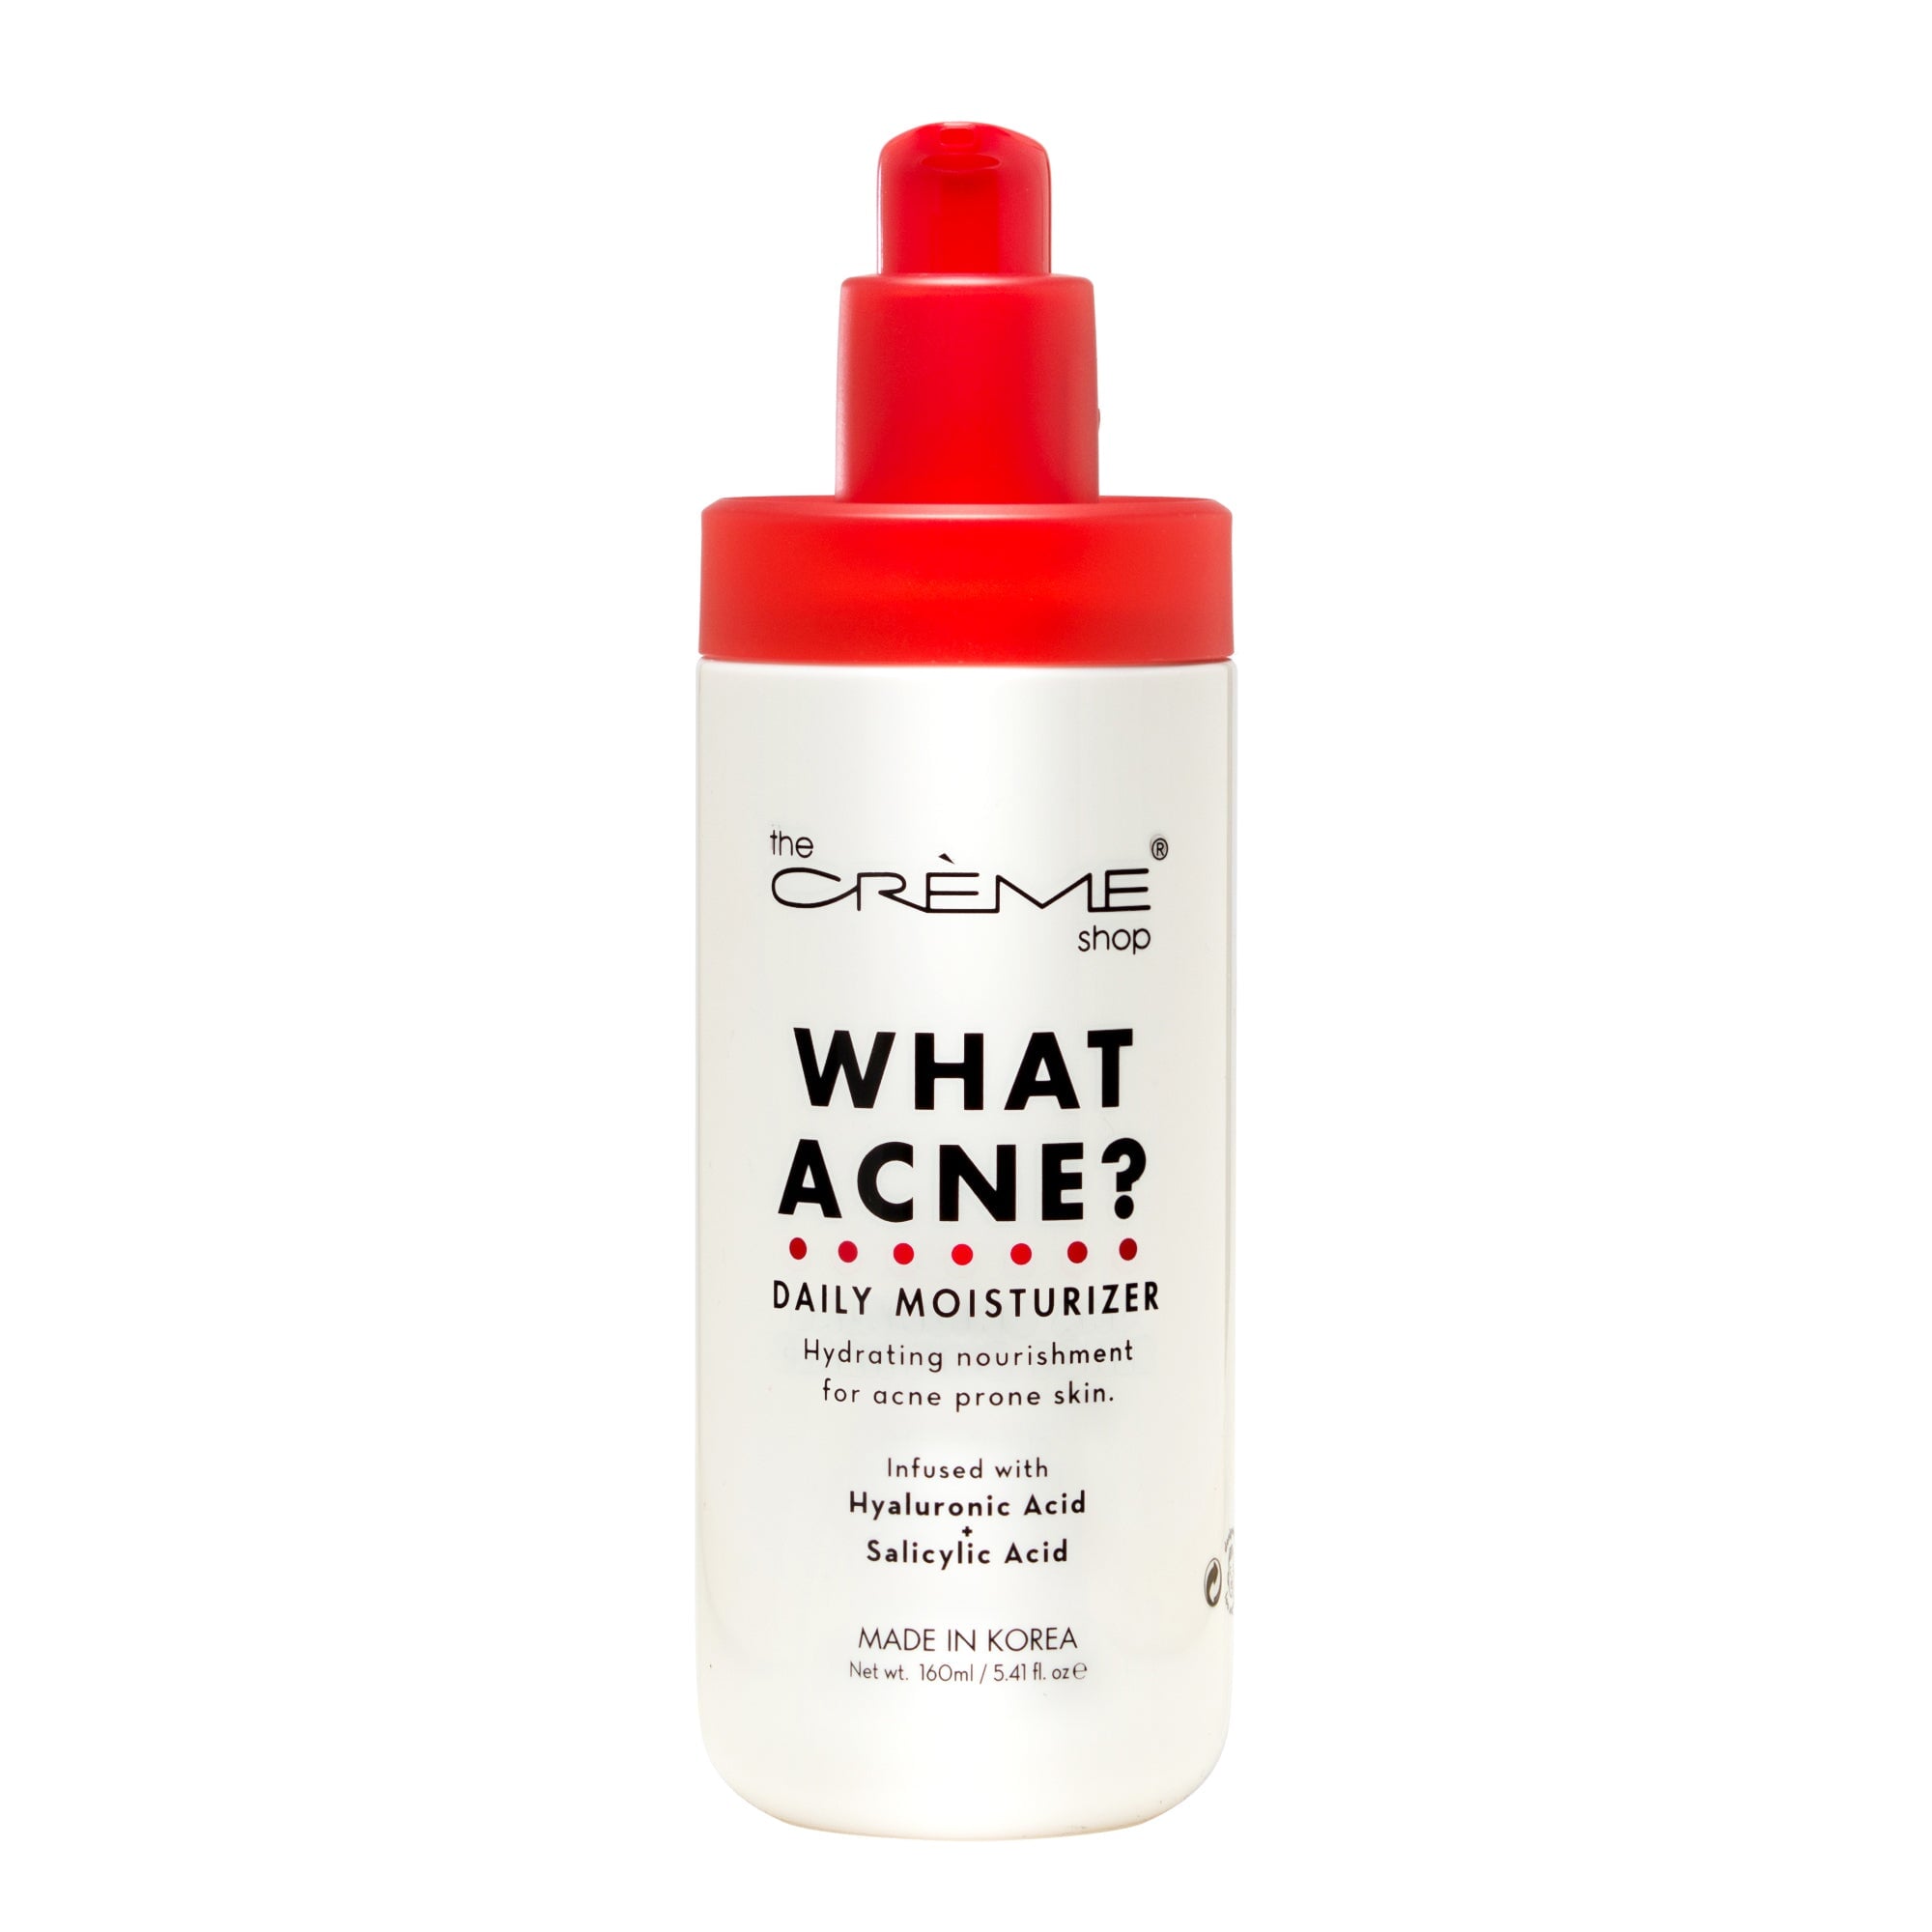 What Acne? - Daily Moisturizer Facial Moisturizers The Crème Shop 